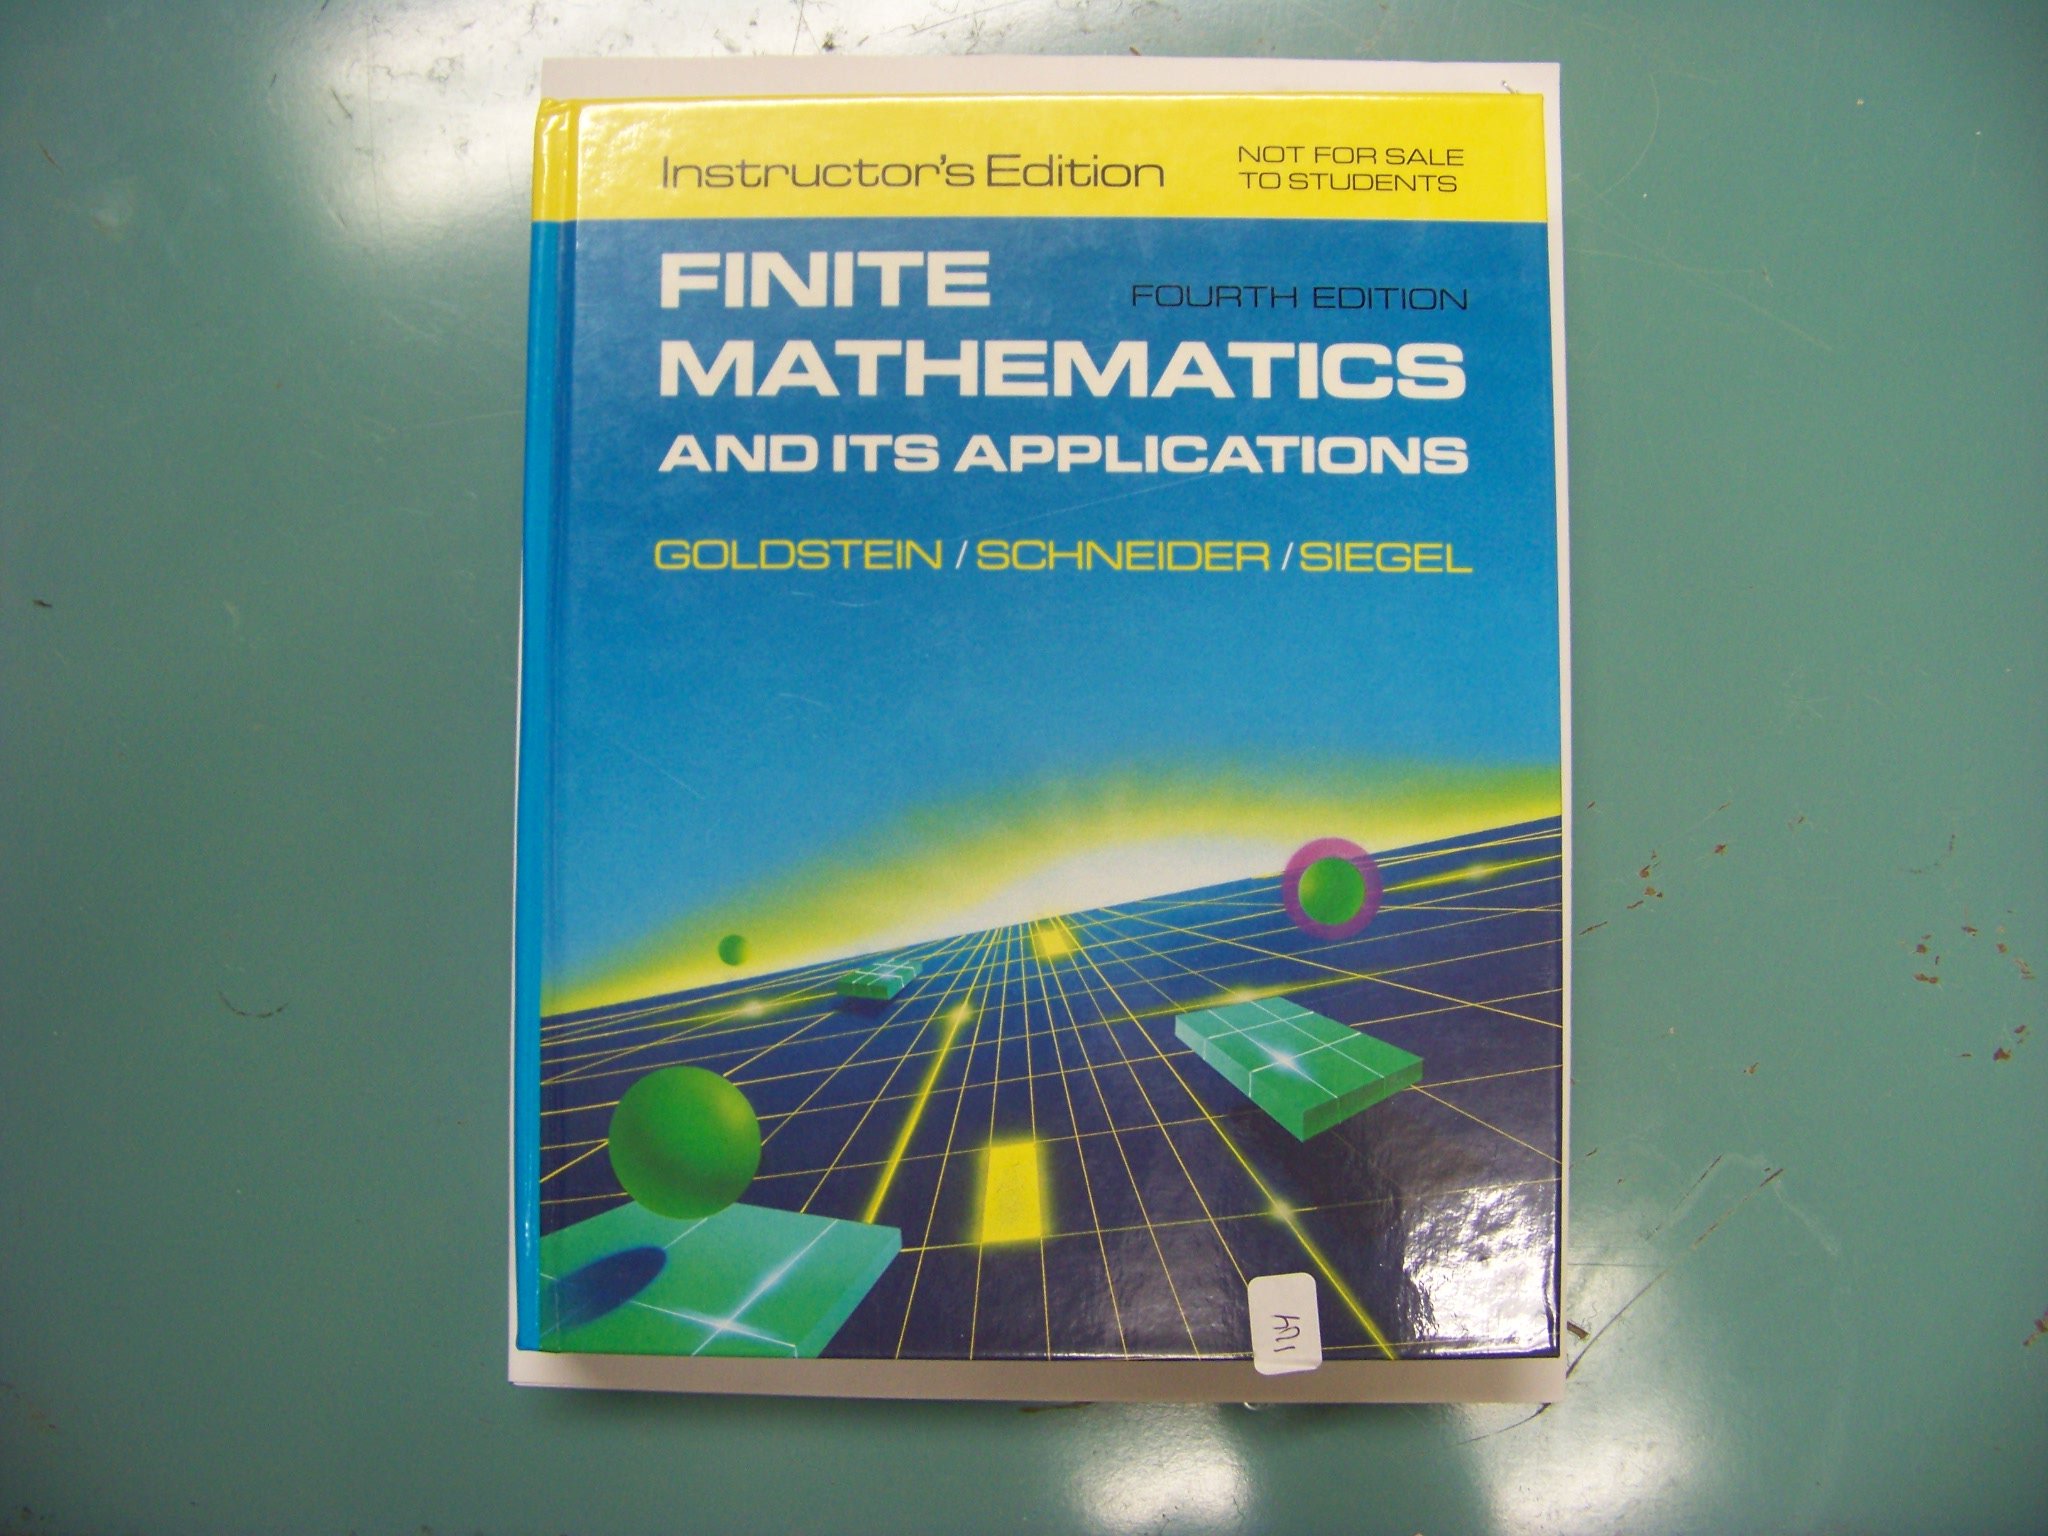 Finite mathematics and its applications magazine reviews